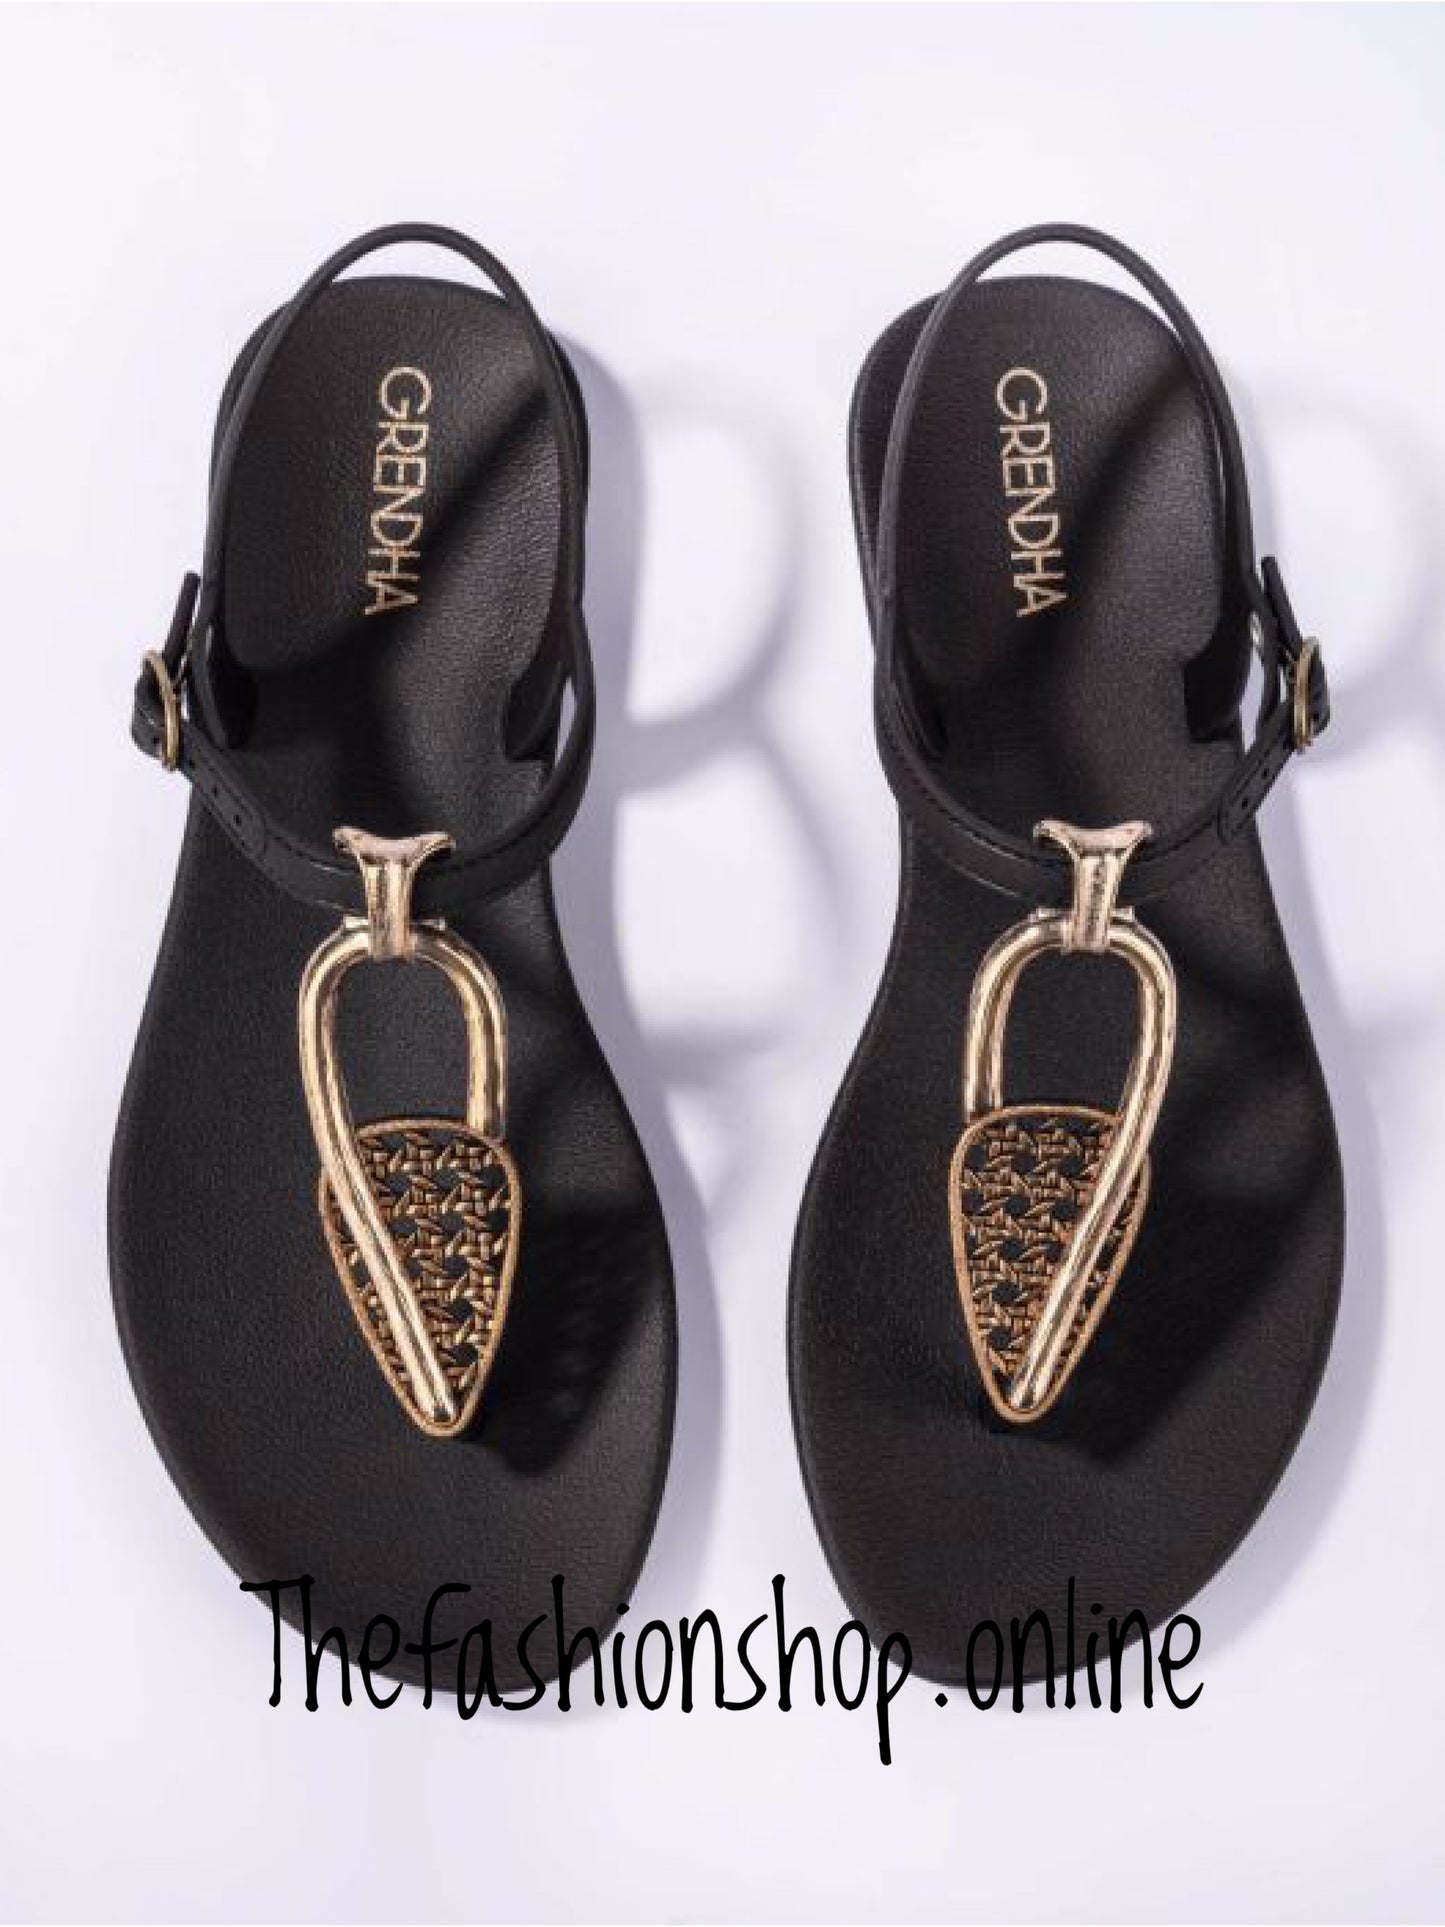 Black Ipanema decor sandal sizes 3-8